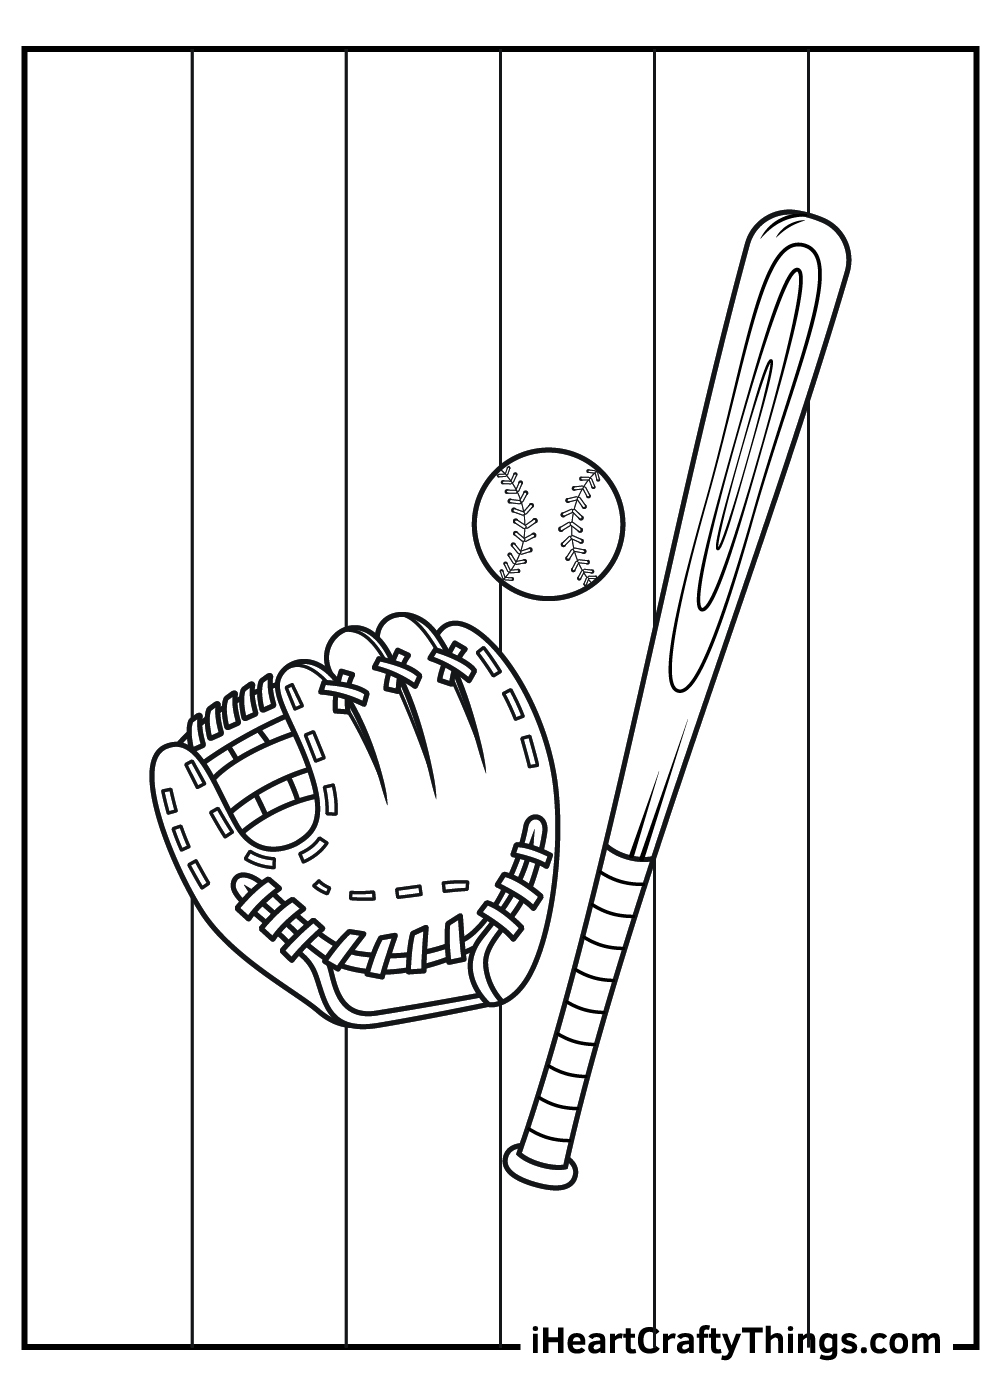 Baseball coloring pages free printables